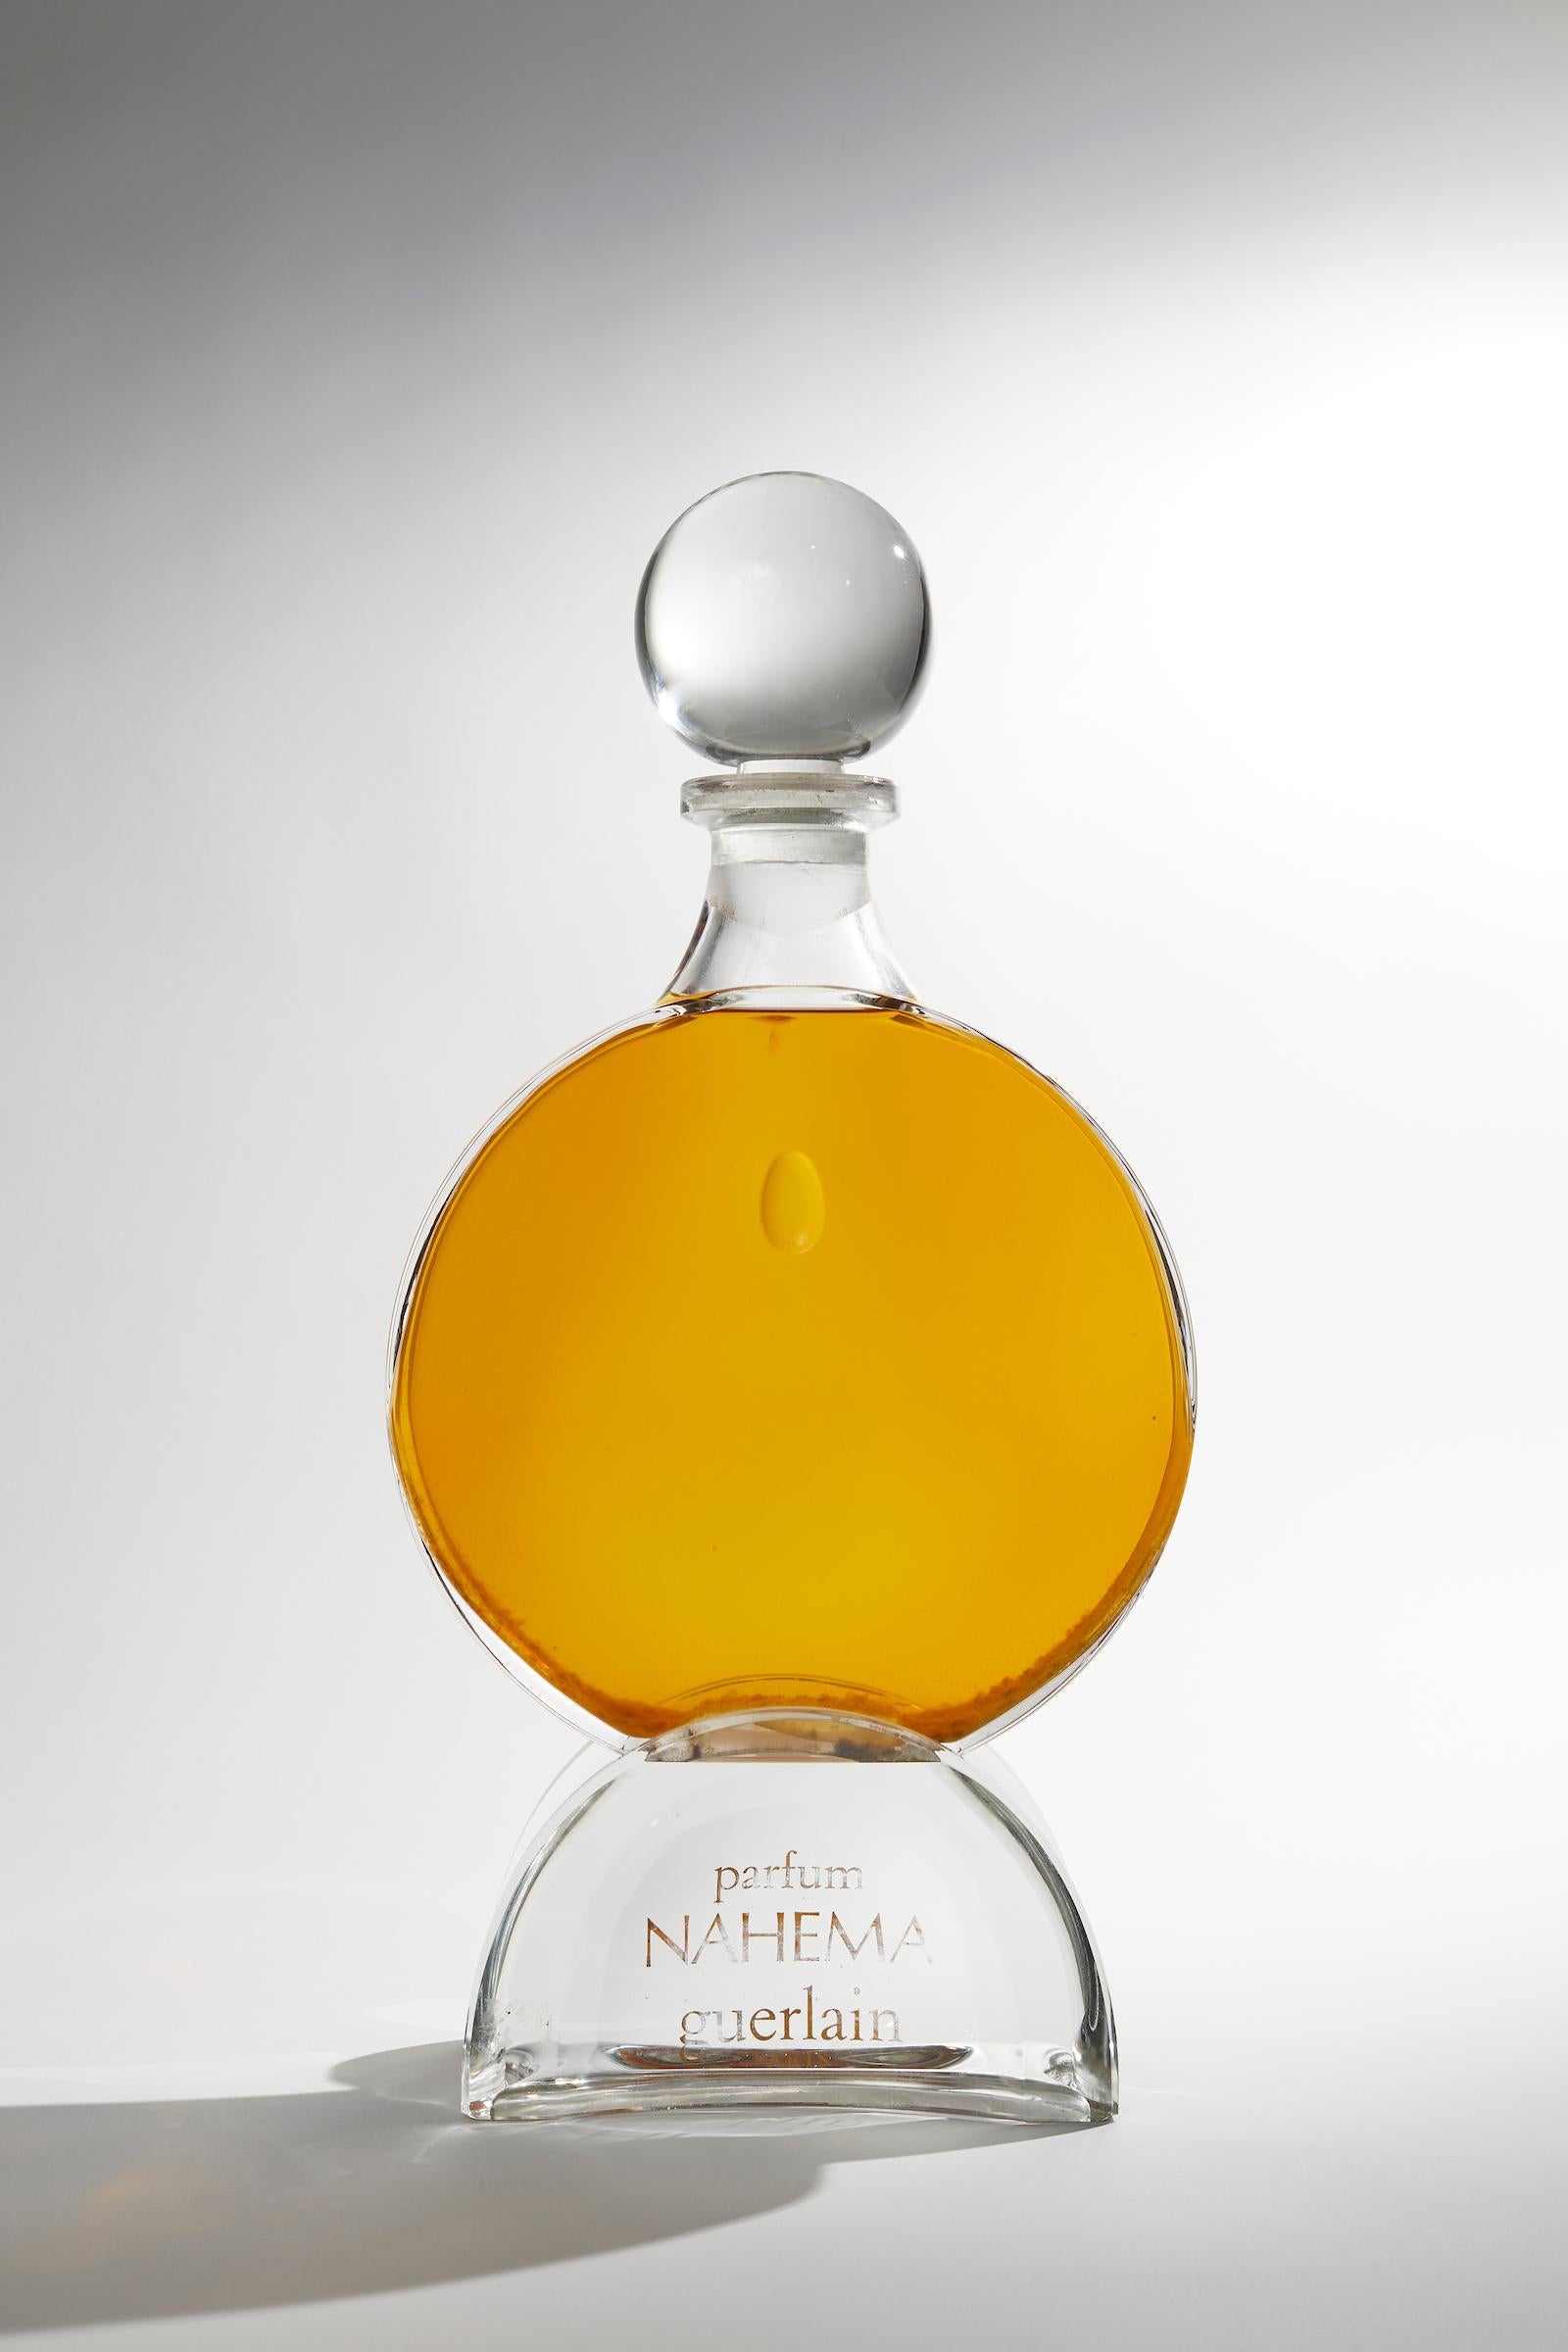 Glass Perfume Bottle "Nahema" by Guerlain For Sale at 1stDibs